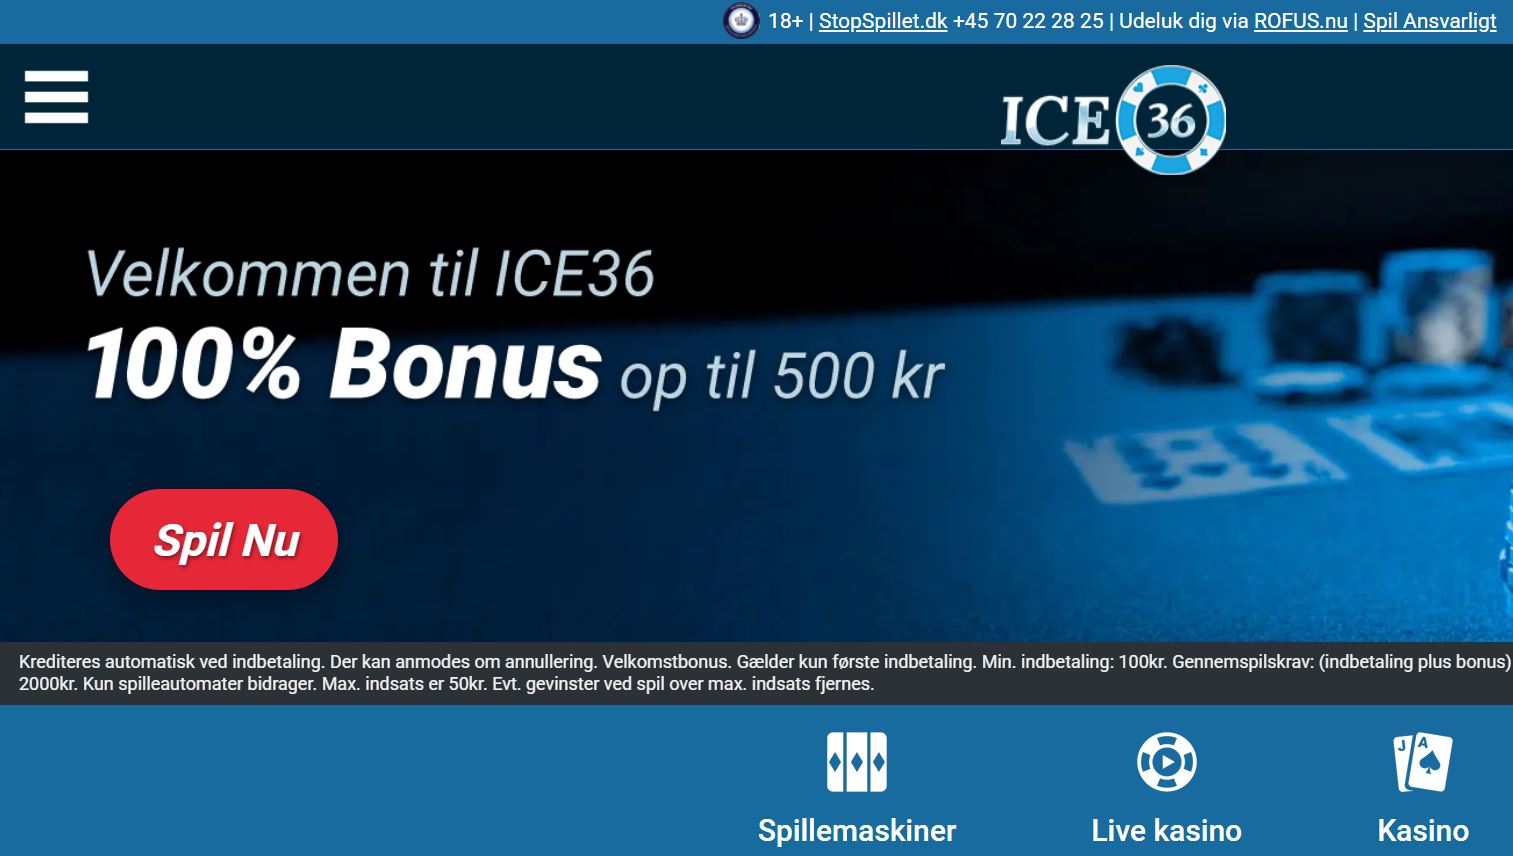 ICE36 anmeldelse